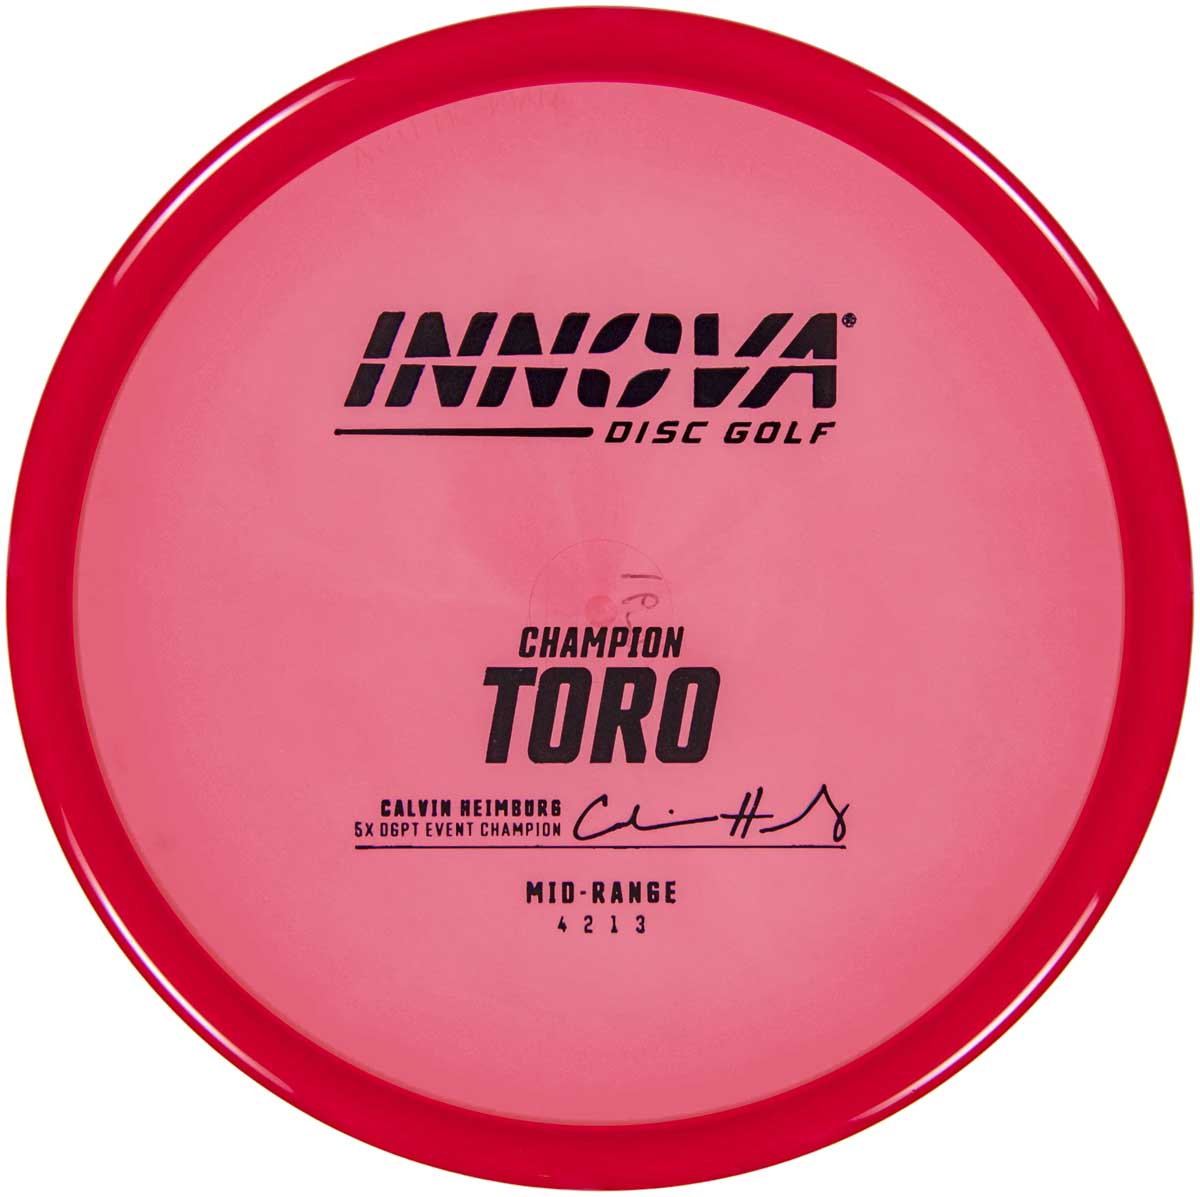 Innova Toro - Champion Mid Range Disc - Calvin Heimburg Signature Edition. Orange color. 